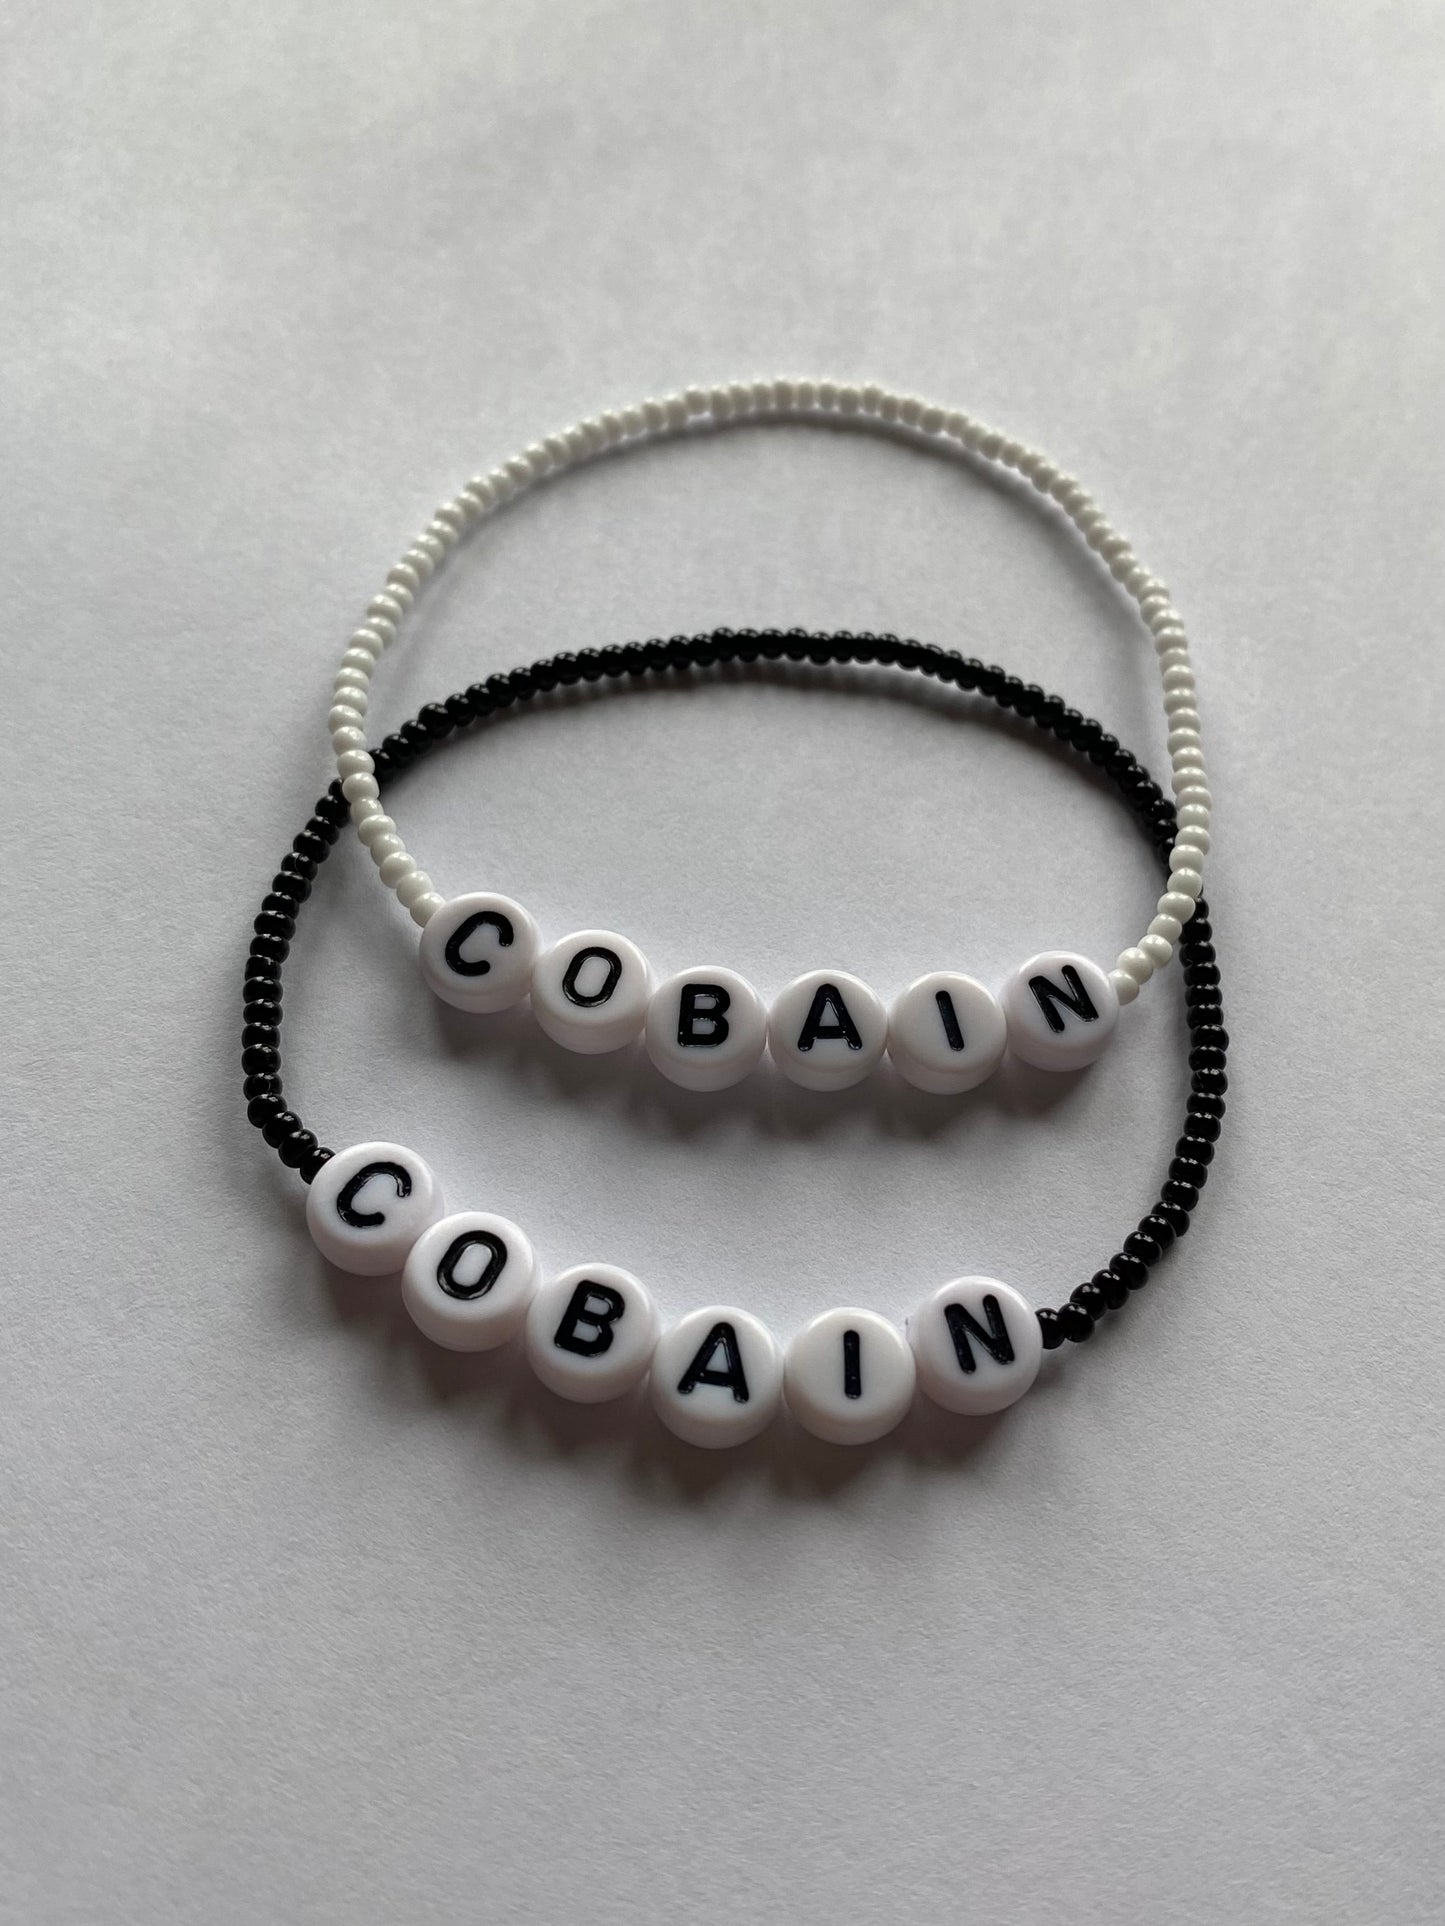 Cobain matching bracelets